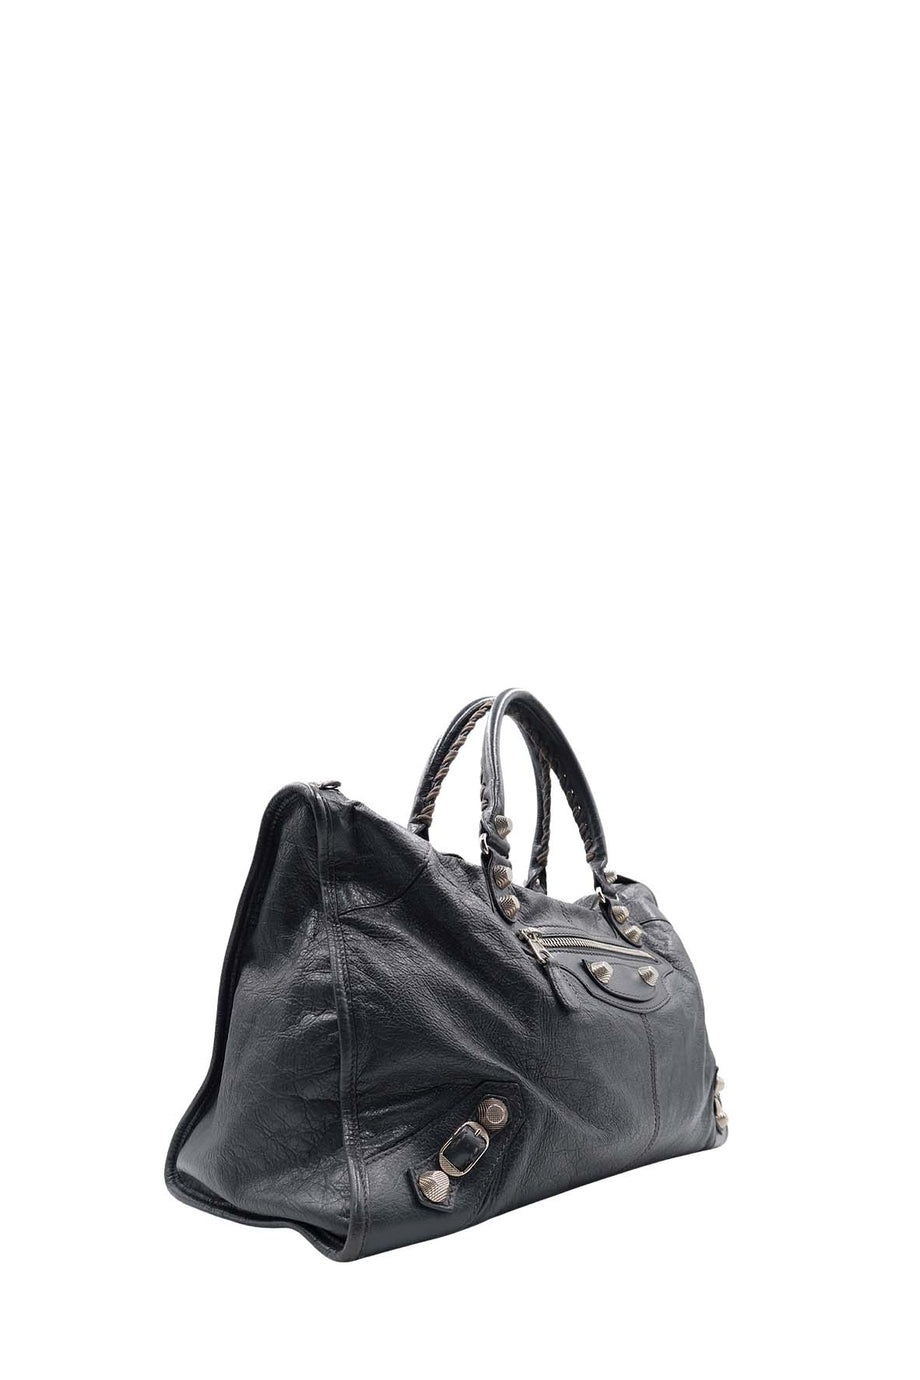 Balenciaga Giant 21 Work Bag Luxury Bags  Wallets on Carousell